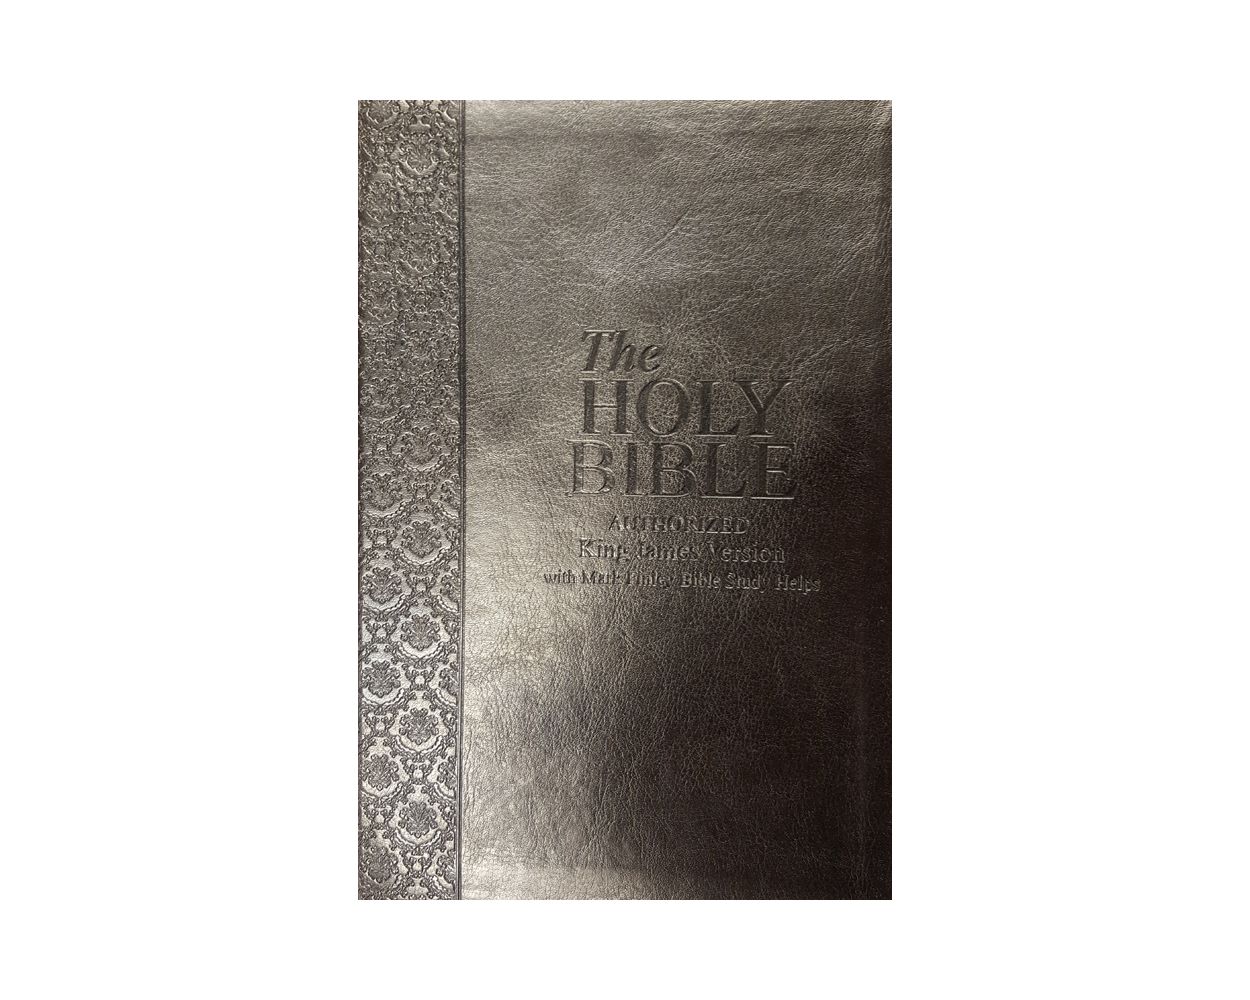 KJV Bible with Mark Finley Helps - Black